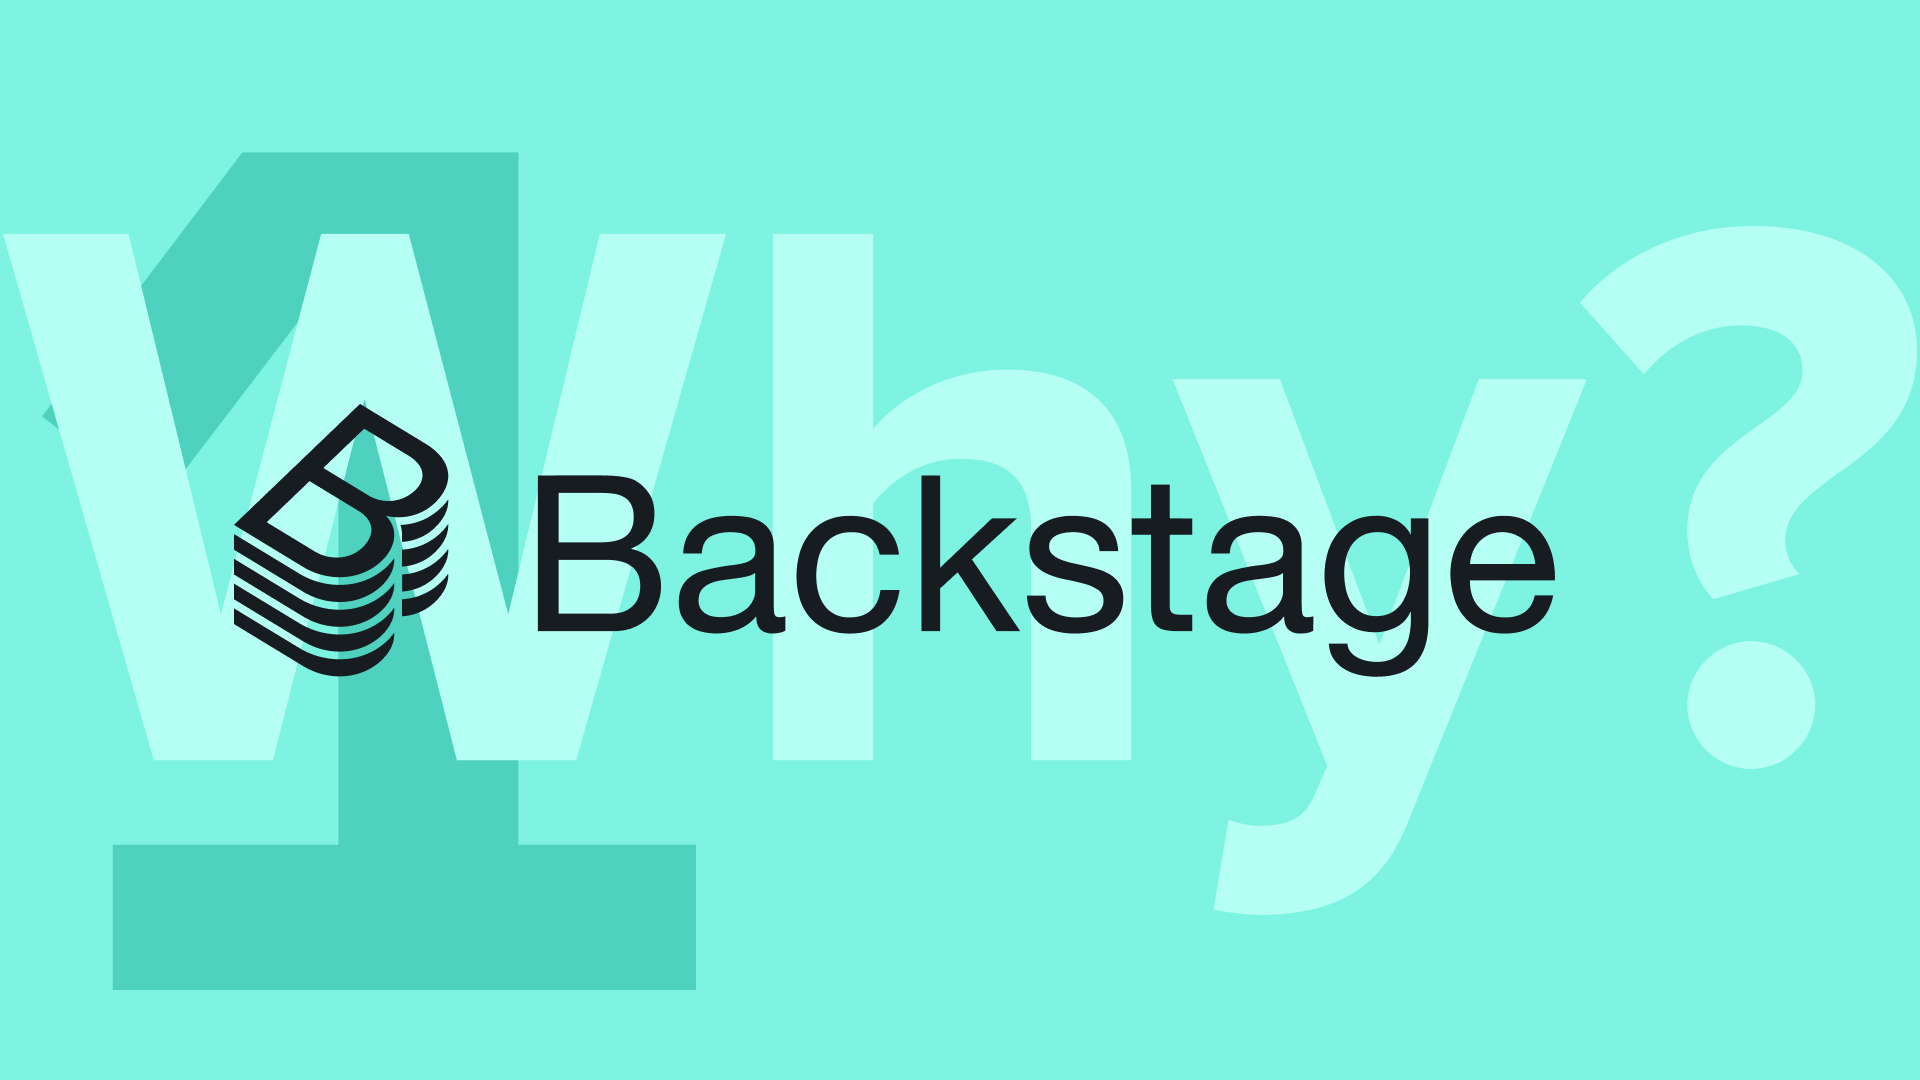 Evaluating Backstage: Why Backstage?